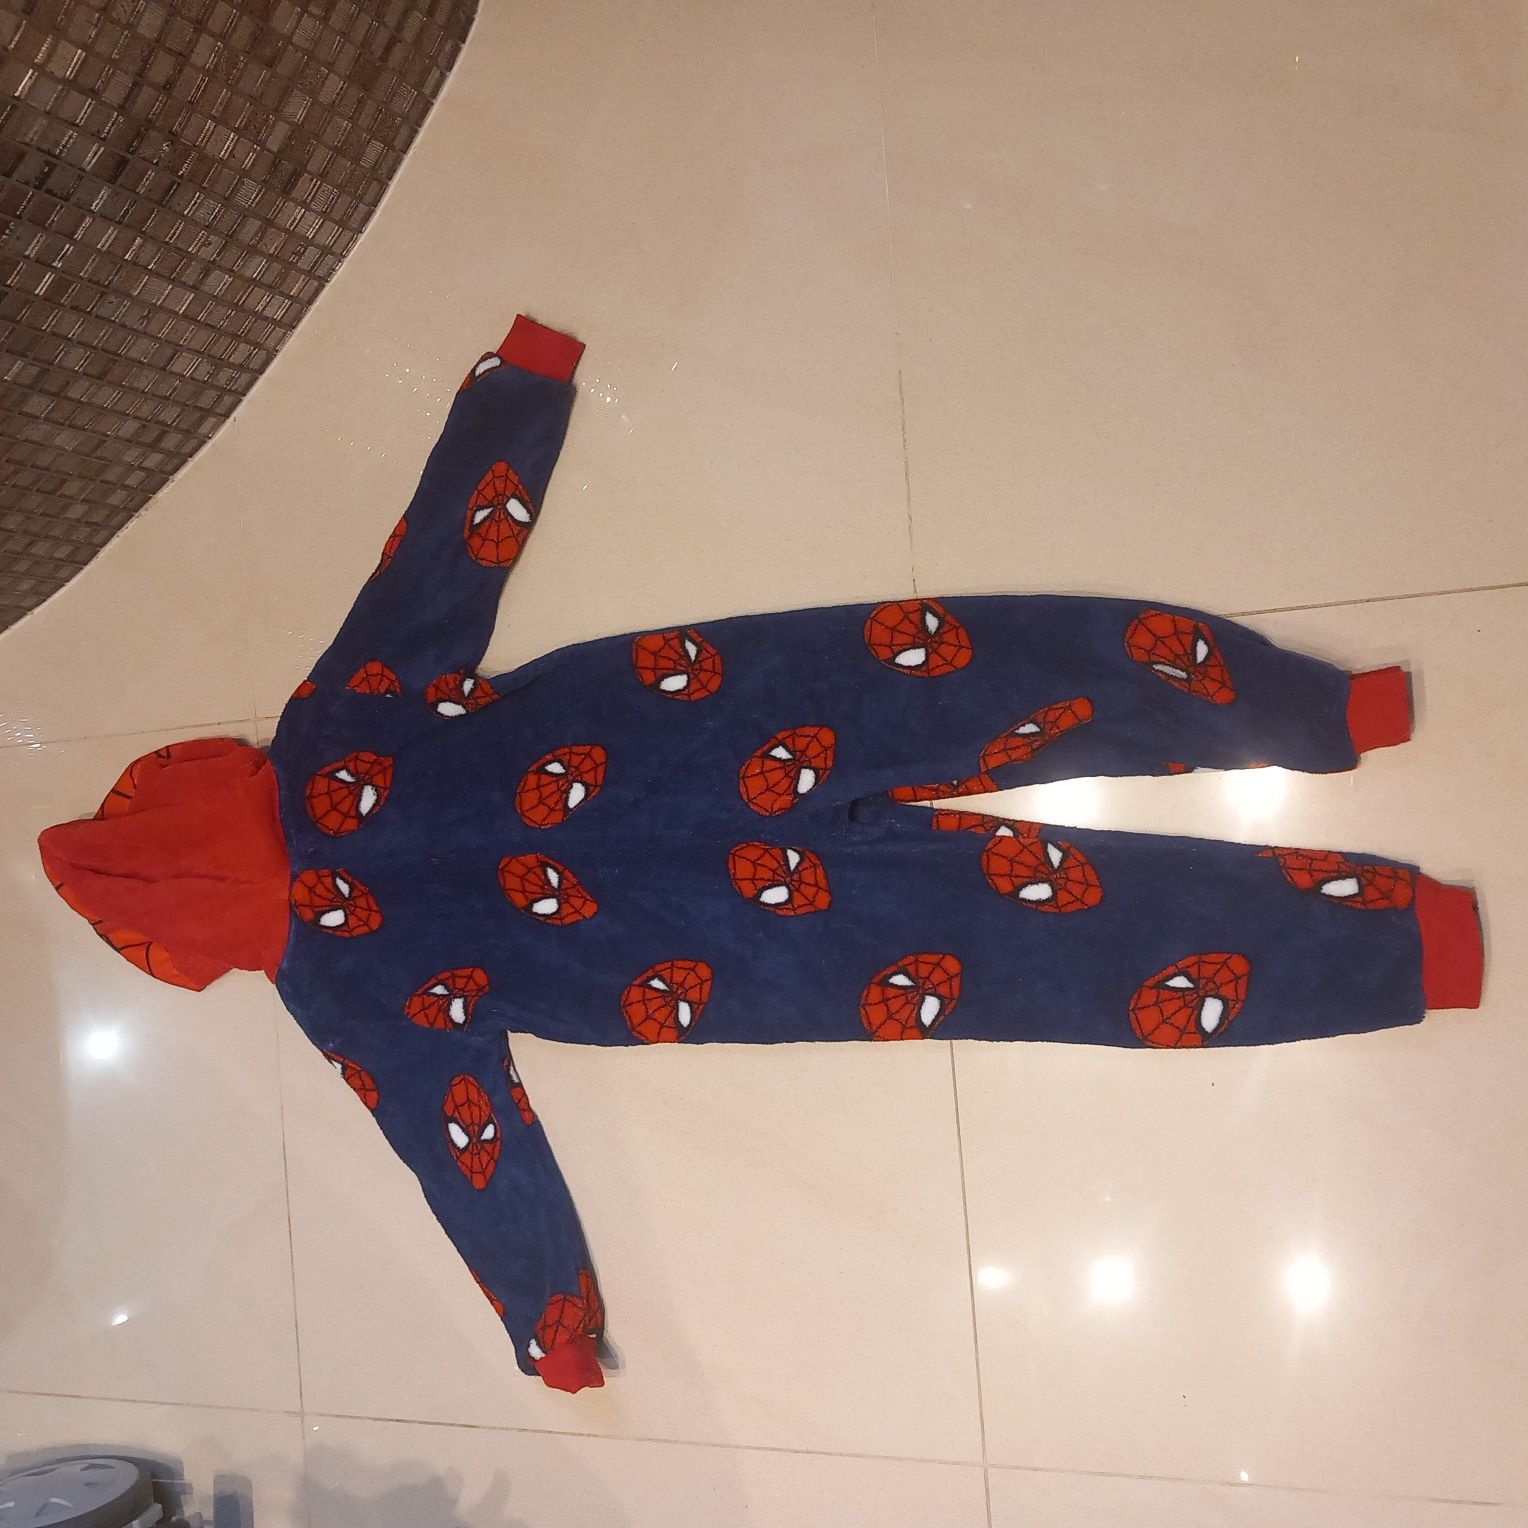 Spider-Man polarowa piżama 116 kostium